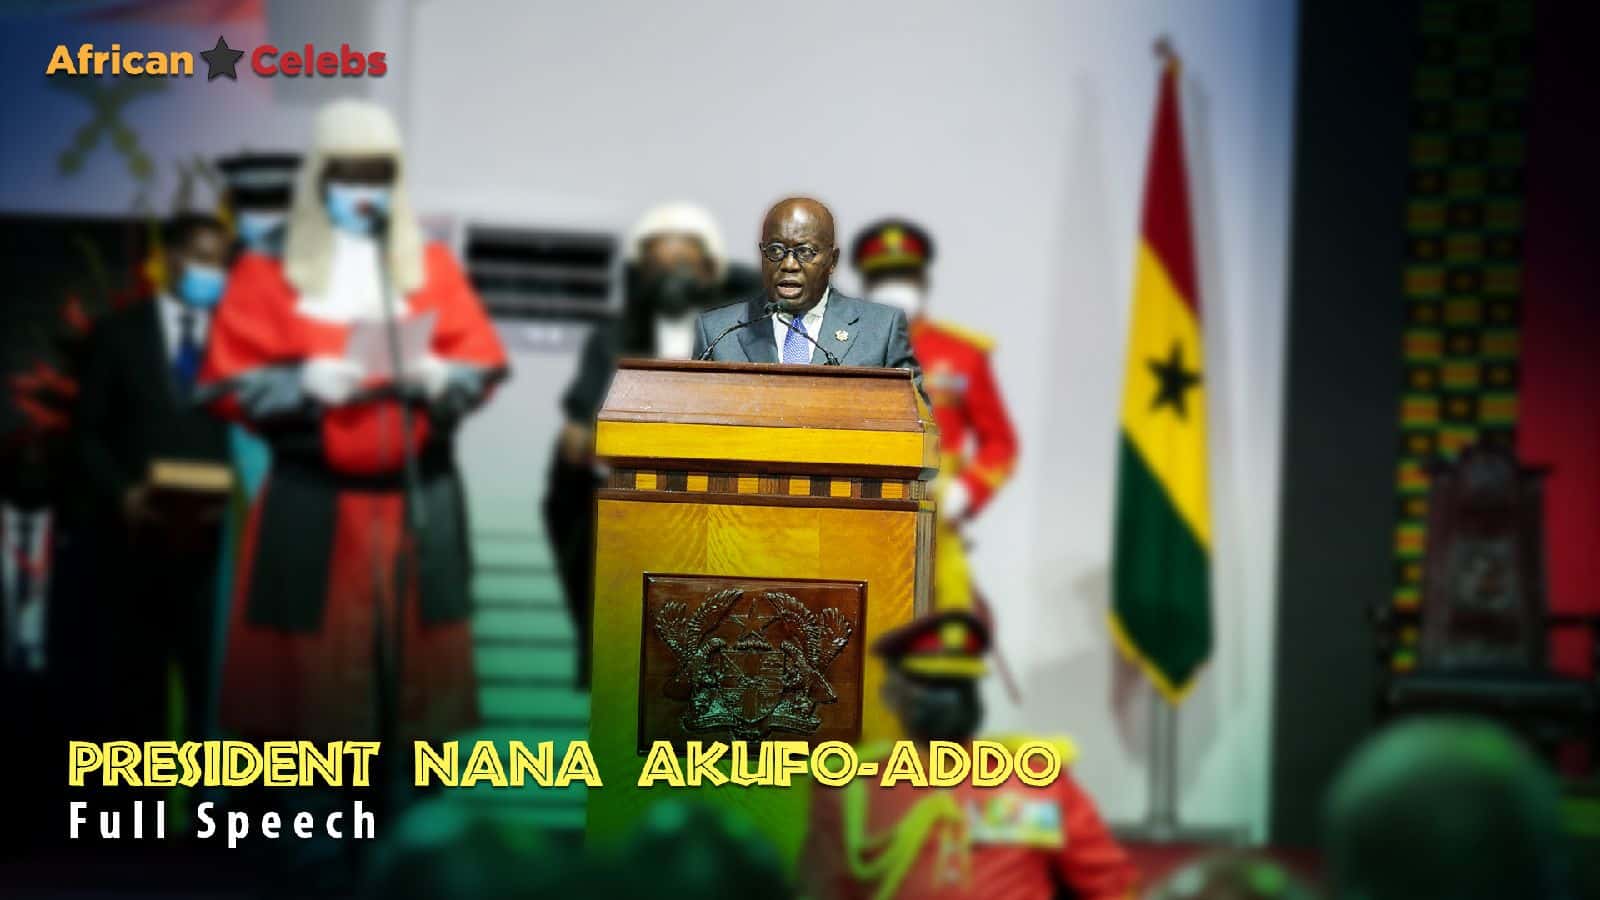 African Celebs President Nana Addo Akufo-Addo - Full Speech